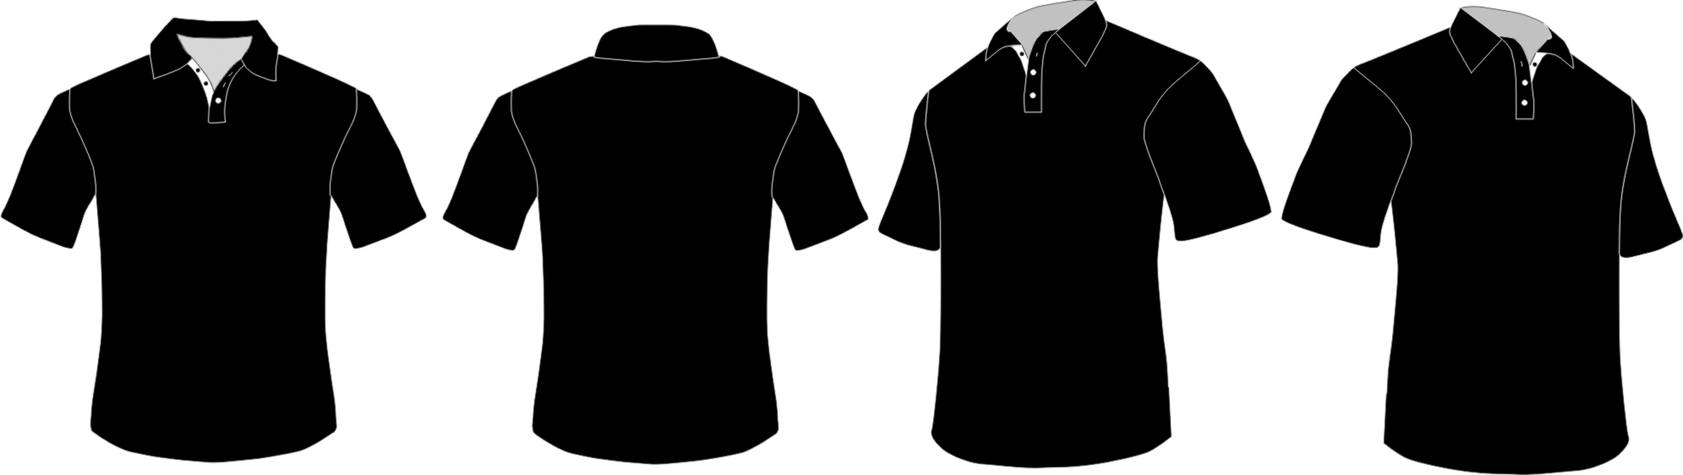 Black T Shirt Template Deviantart Nils Stucki Kieferorthopade - black t shirt template deviantart